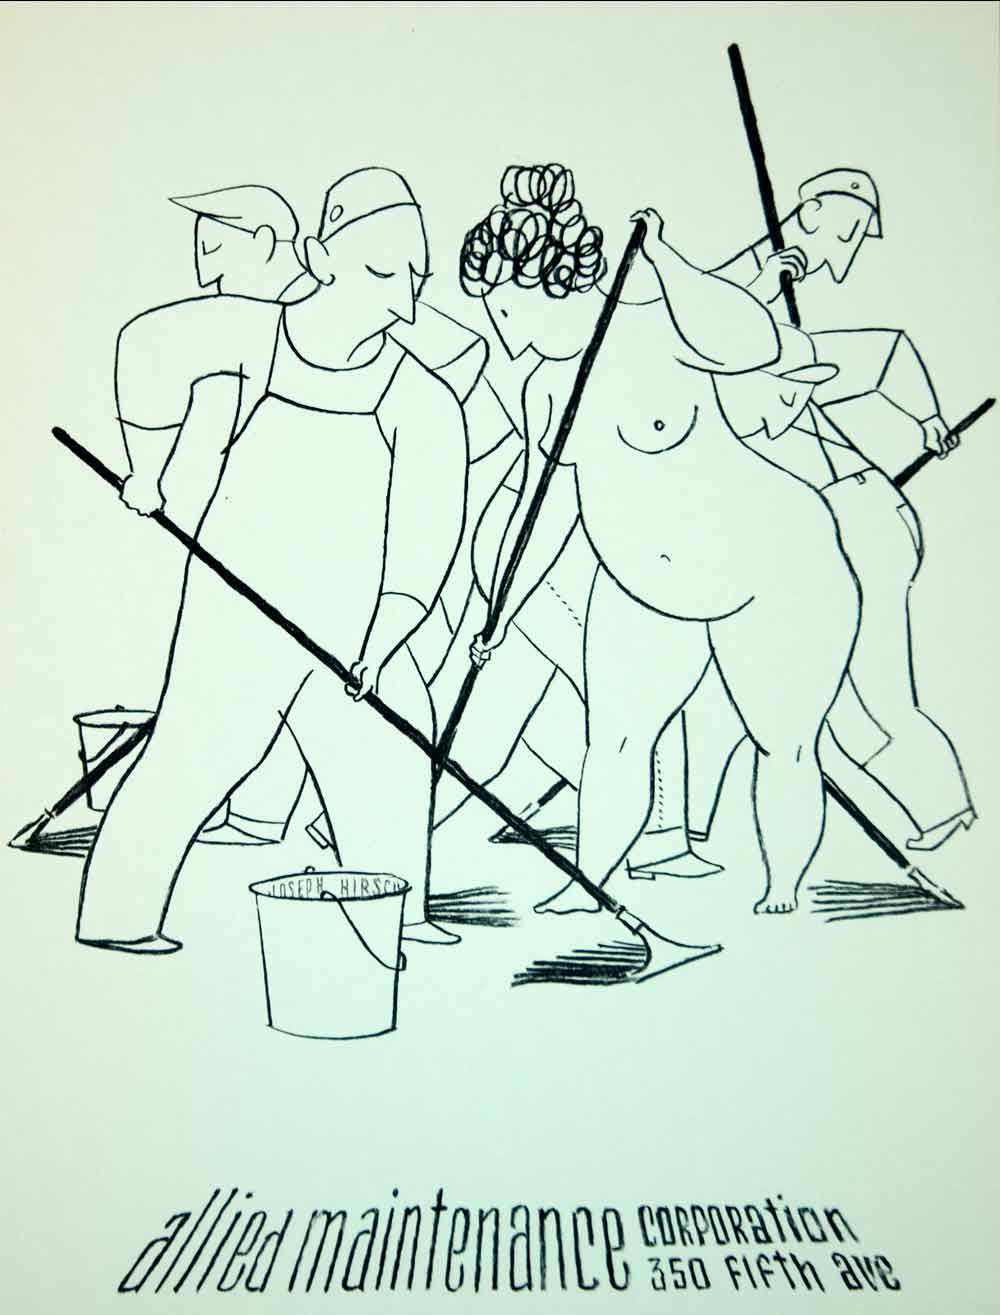 1958 Lithograph Joseph Hirsch Art Nude Woman Janitor Allied Maintenance Mopping